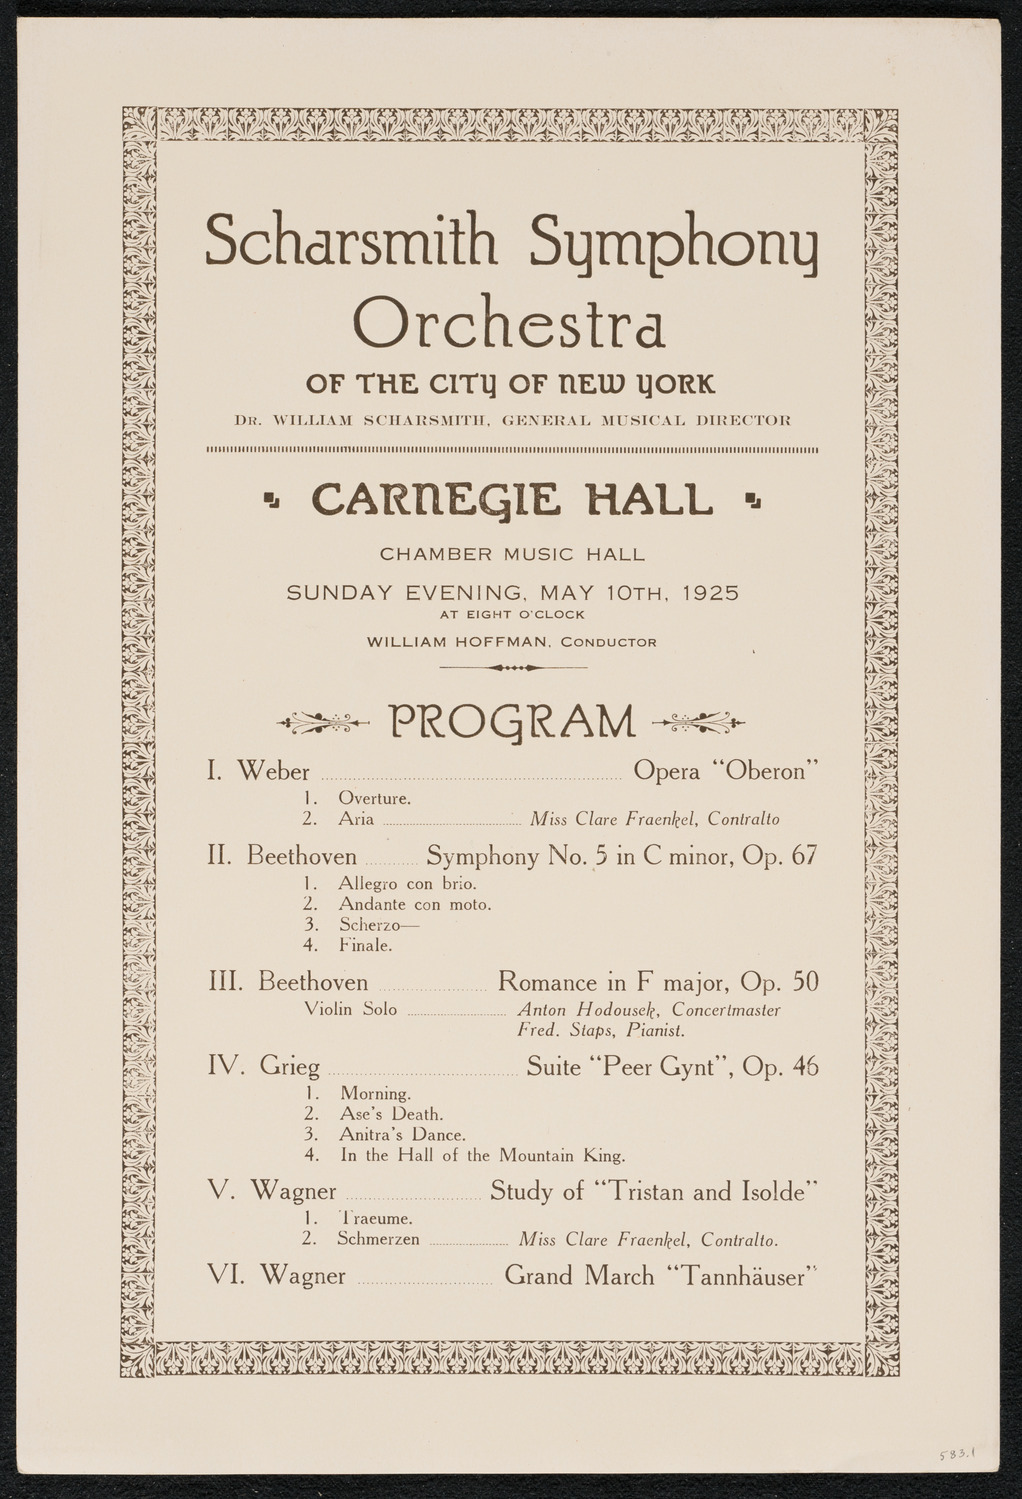 Scharsmith Symphony Orchestra, May 10, 1925, program page 1